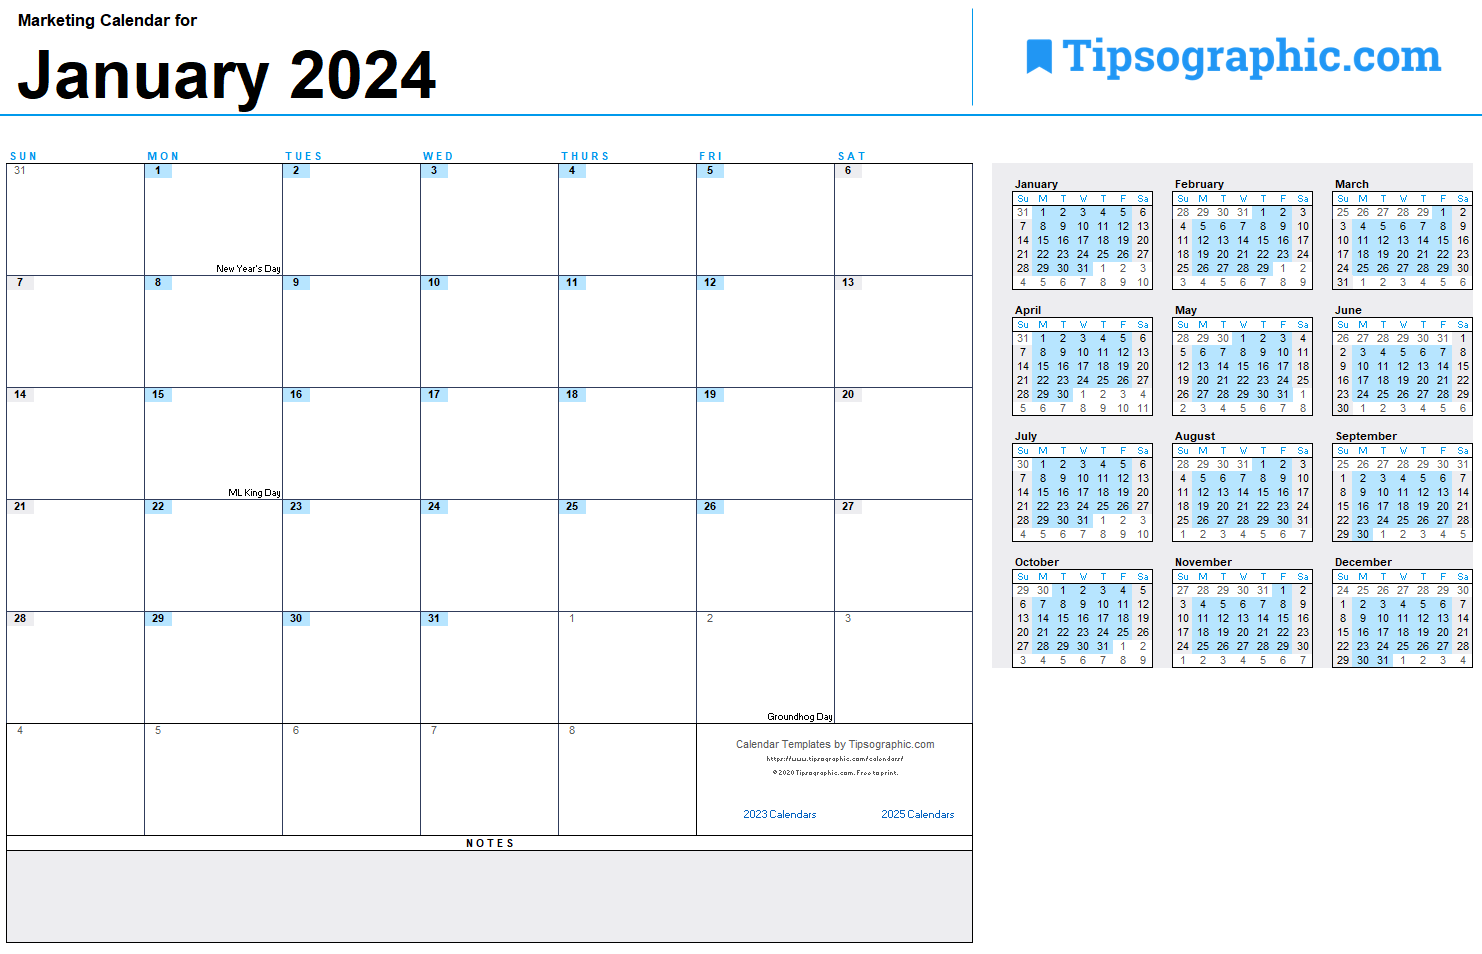 Download the 2020 TikTok Marketing Calendar (Blank) | Tipsographic